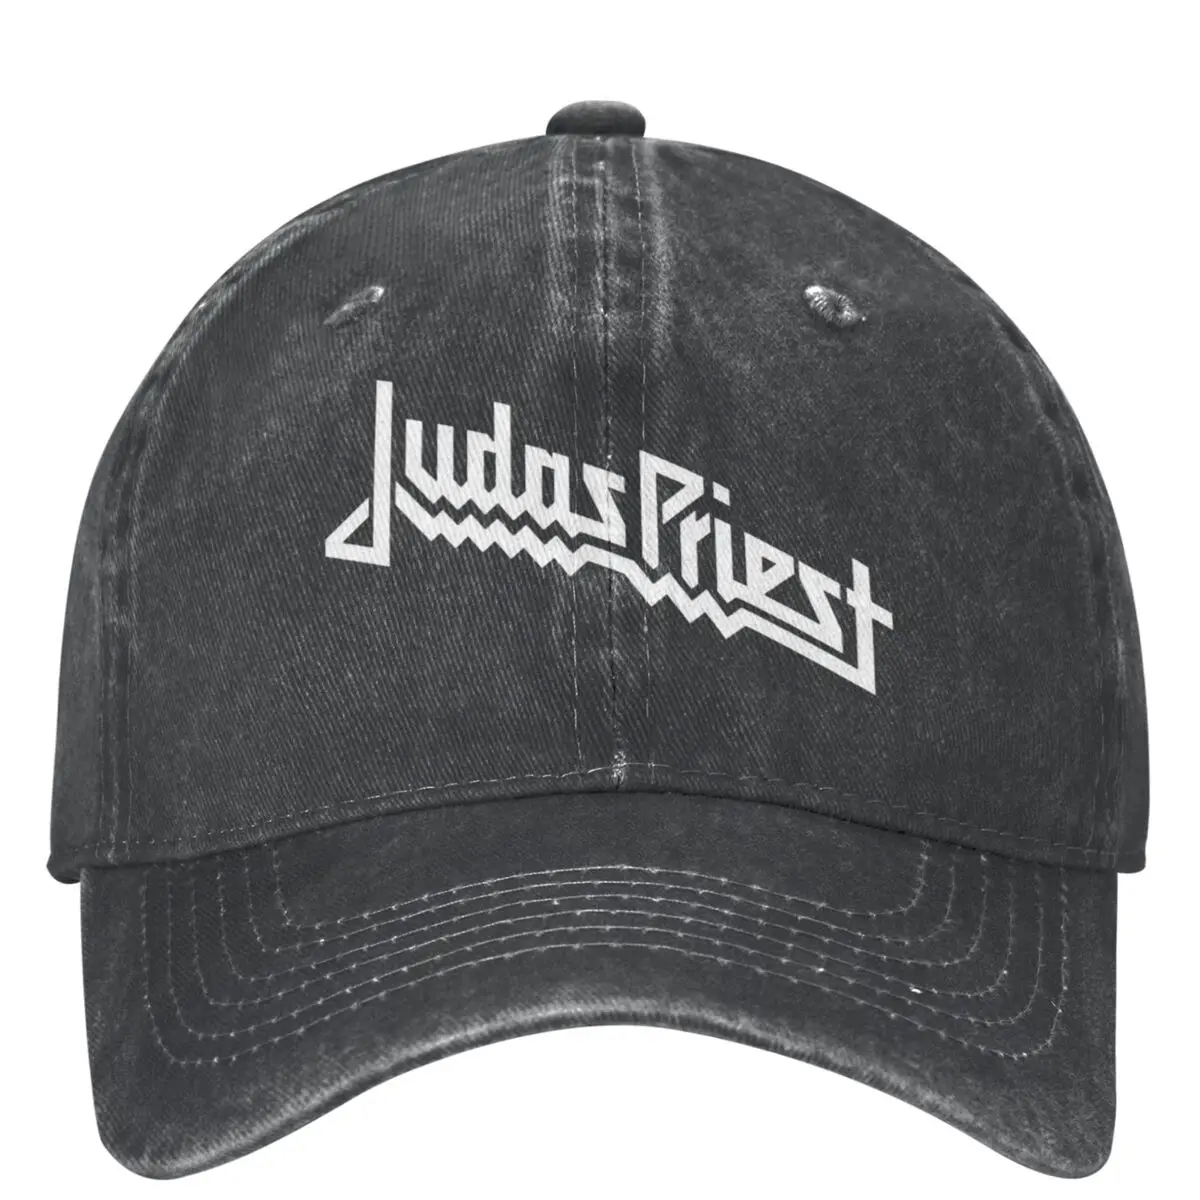 

Rock Judas Priest Band Baseball Caps Merchandise For Men Women Vintage Distressed Washed Hats Casquette Dad Hat Adjustable